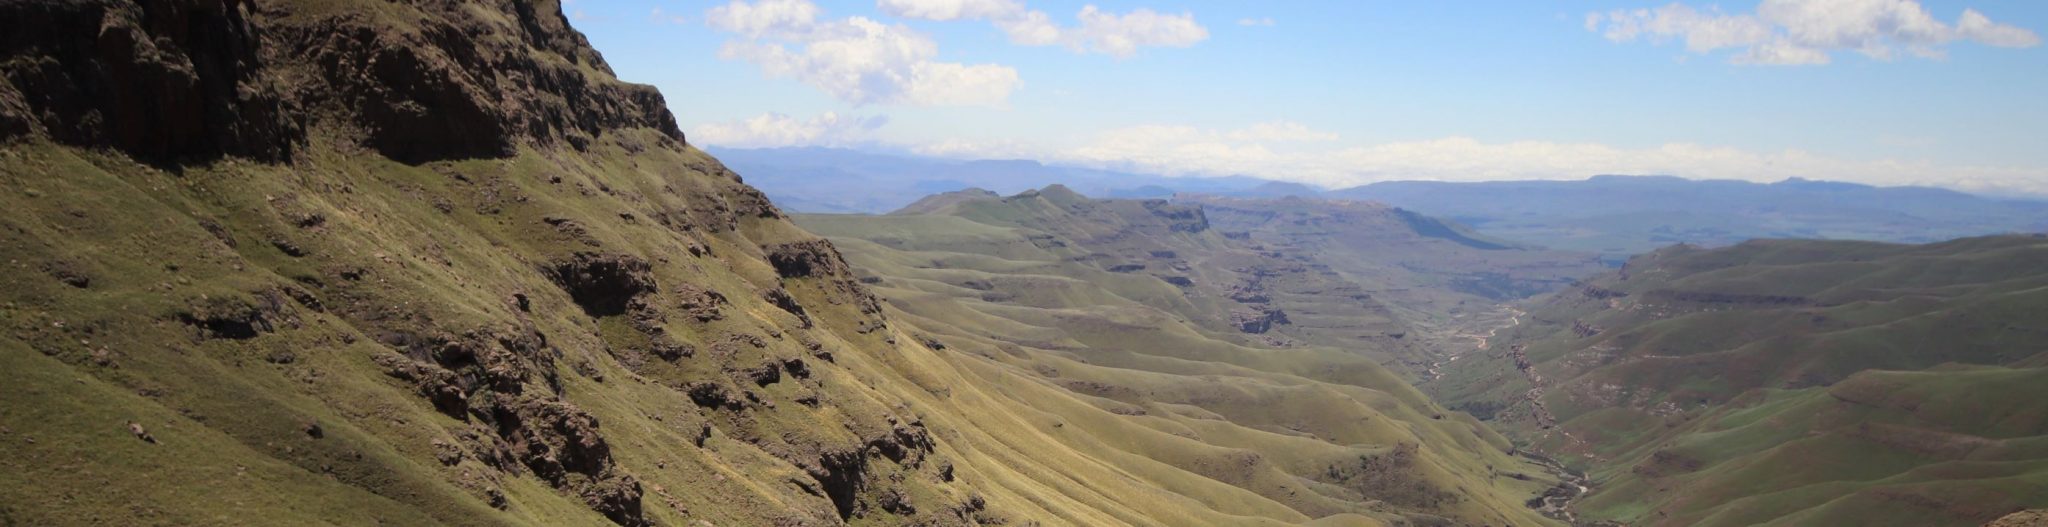 Drakensberg Mountains, South Africa